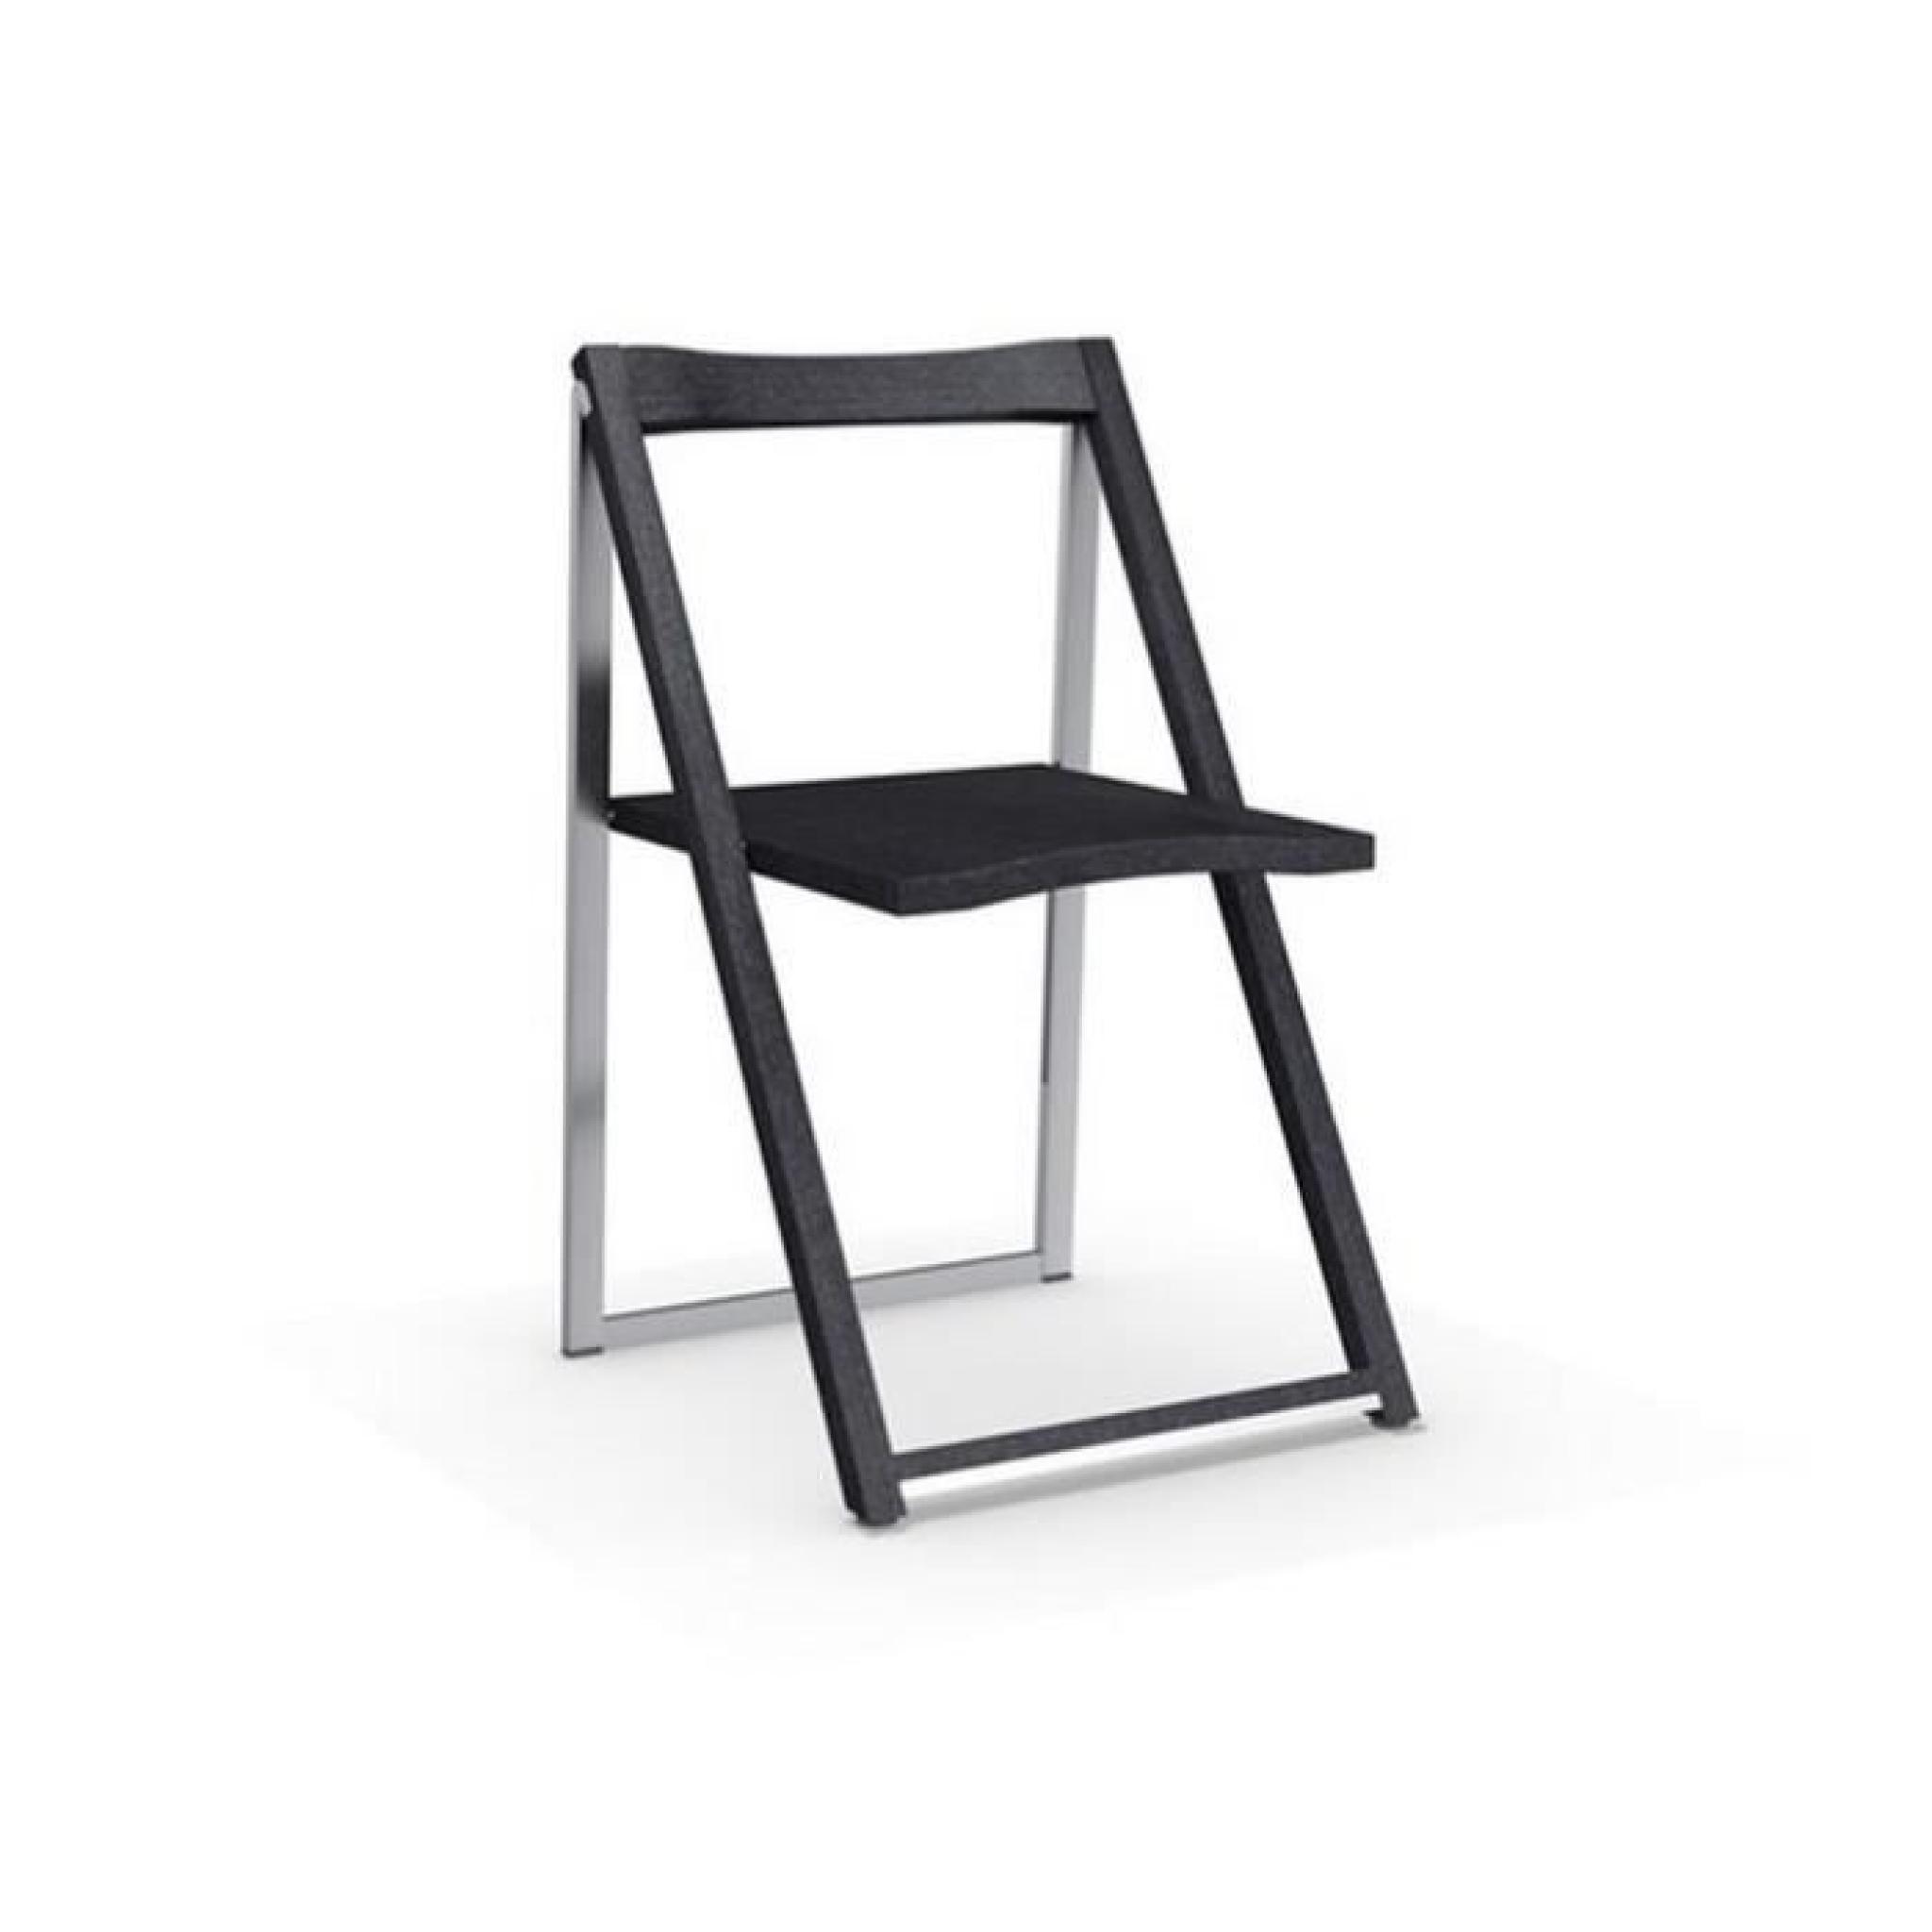 Chaise pliante SKIP graphite et aluminium satiné de CALLIGARIS